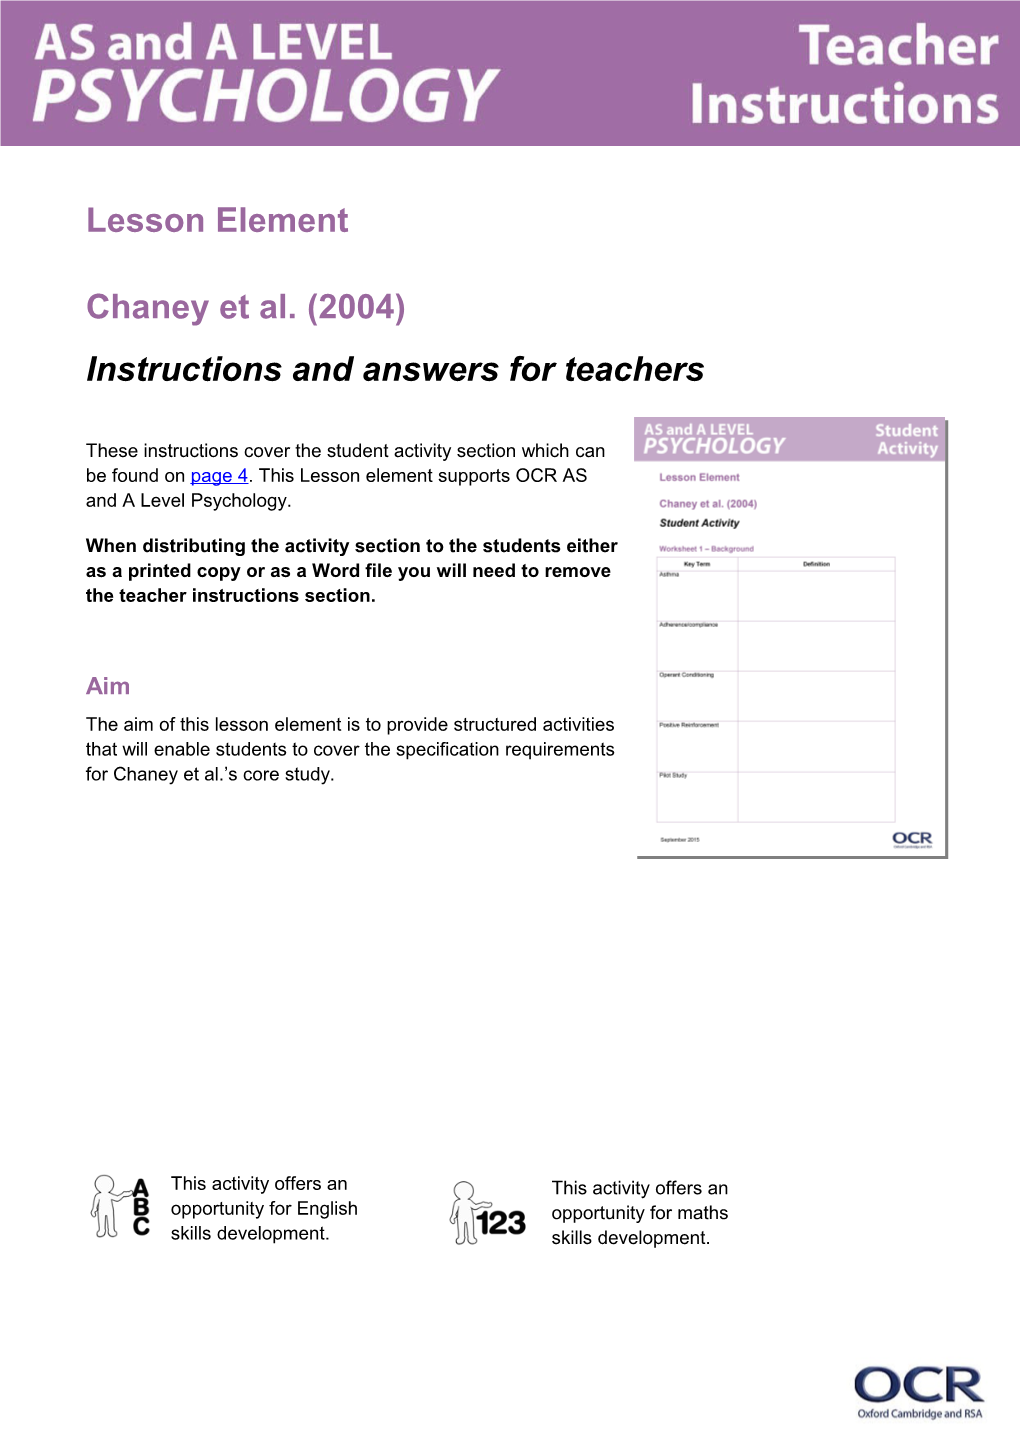 AS and a Level Psychology Lesson Element - Chaney Et Al (2004)